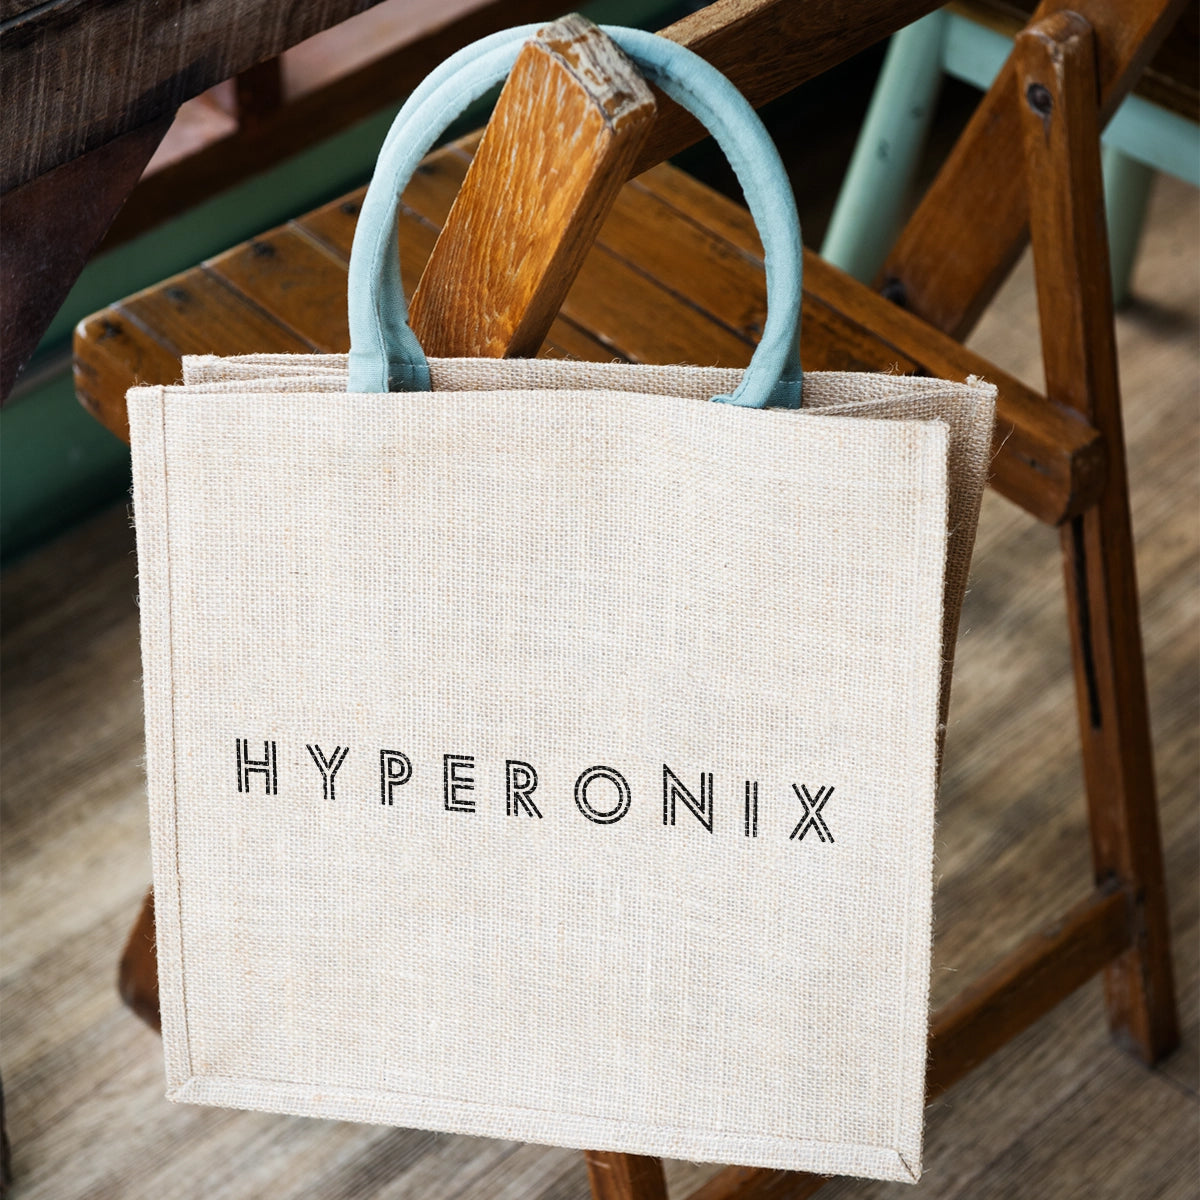 hyperonix.com